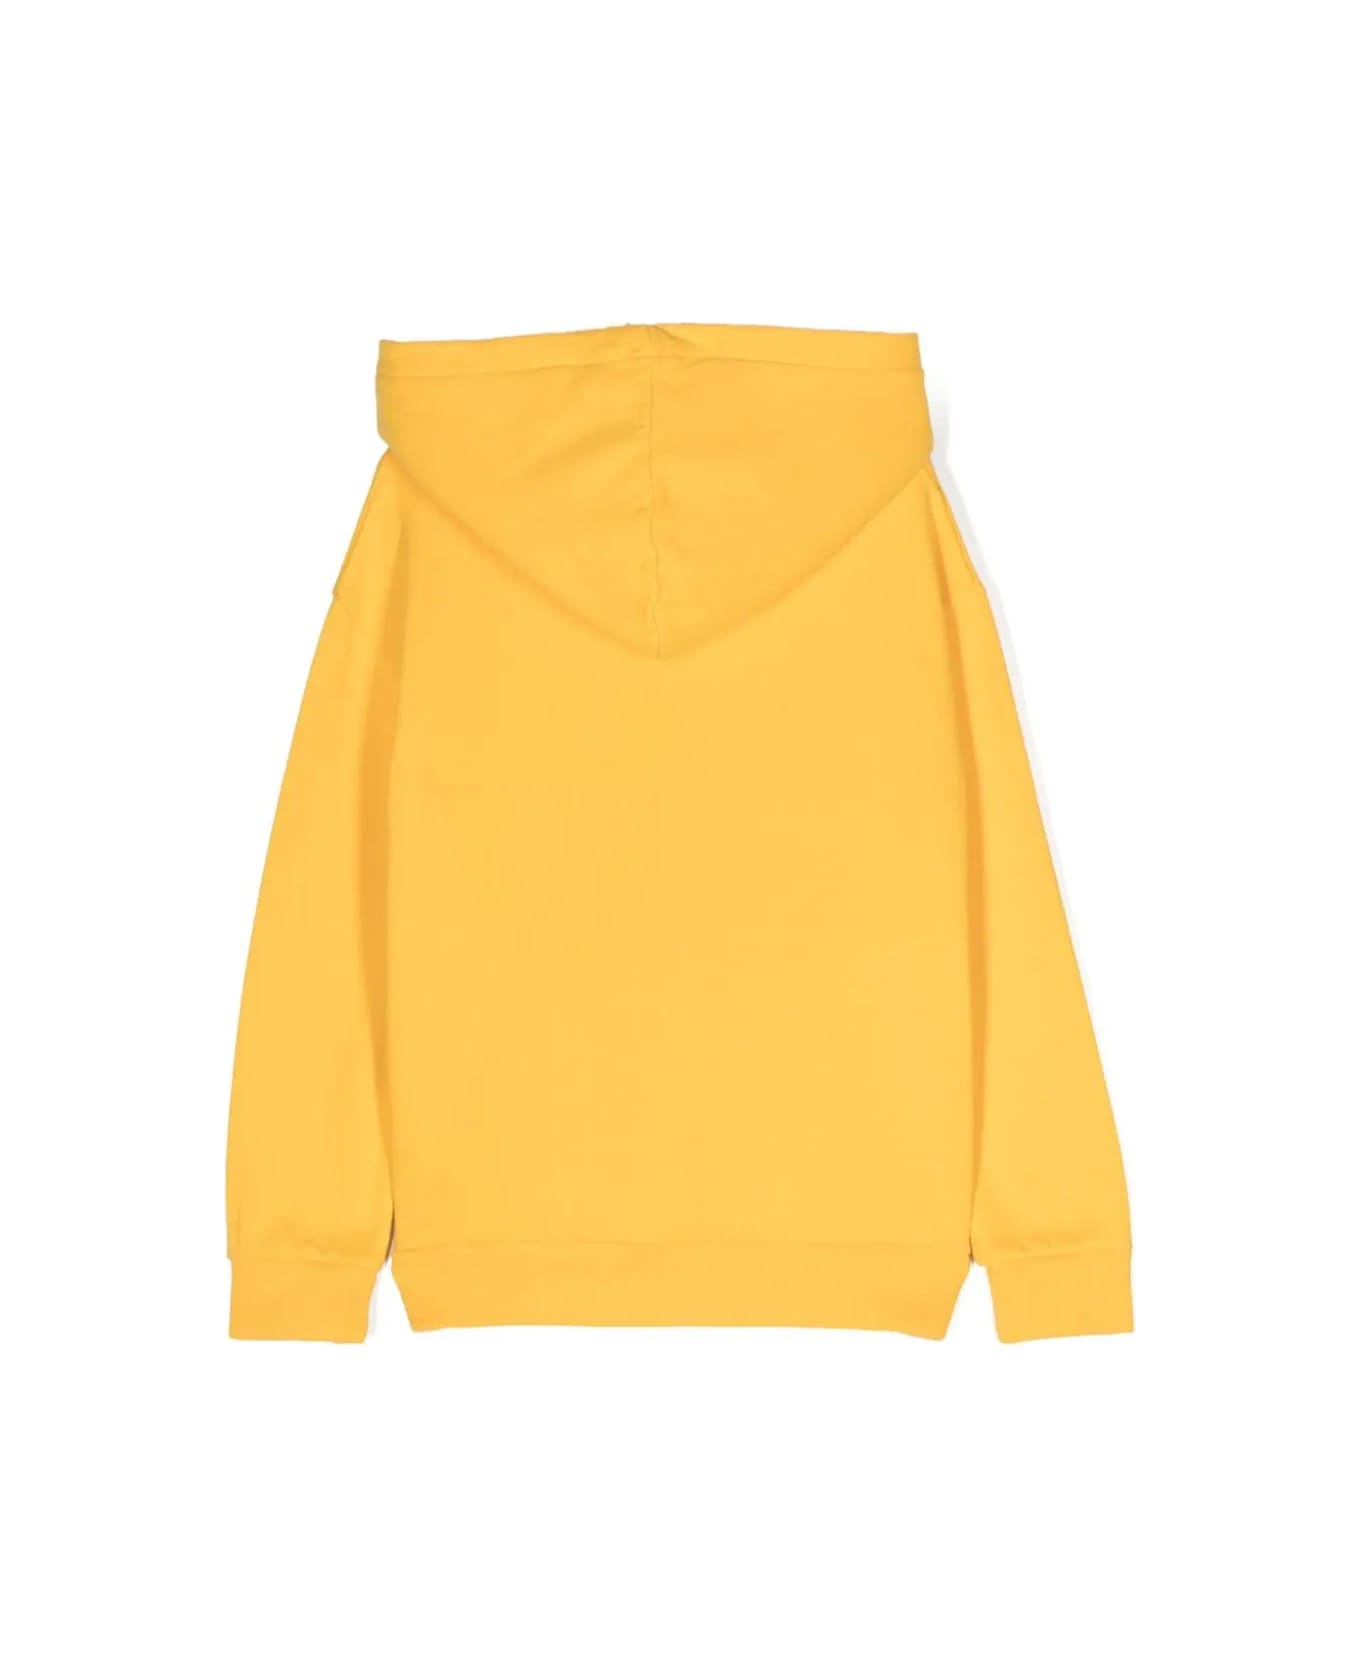 Vilebrequin Sweatshirt With Logo - Yellow